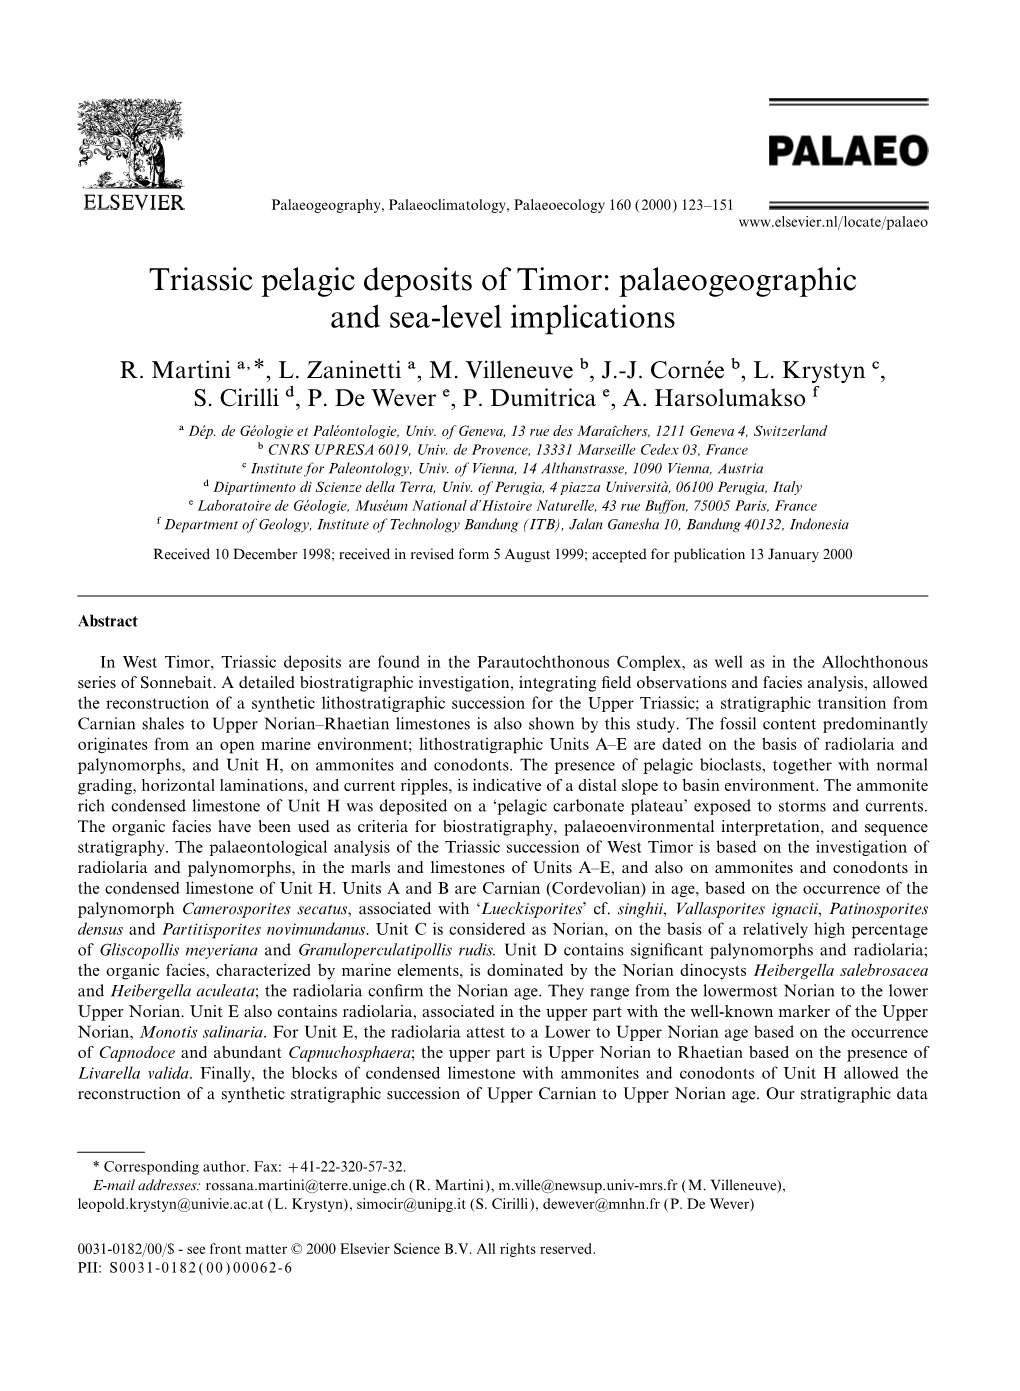 Triassic Pelagic Deposits of Timor: Palaeogeographic and Sea-Level Implications